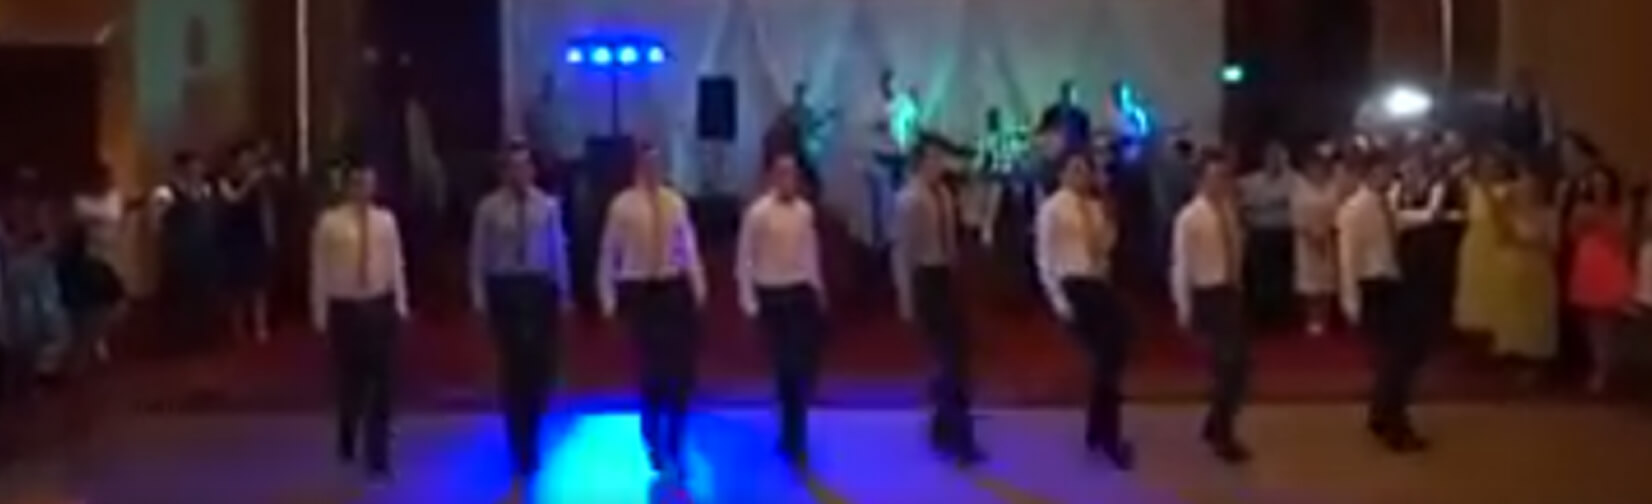 Irish groom gets old Irish dancing crew, back together for incredible wedding surprise